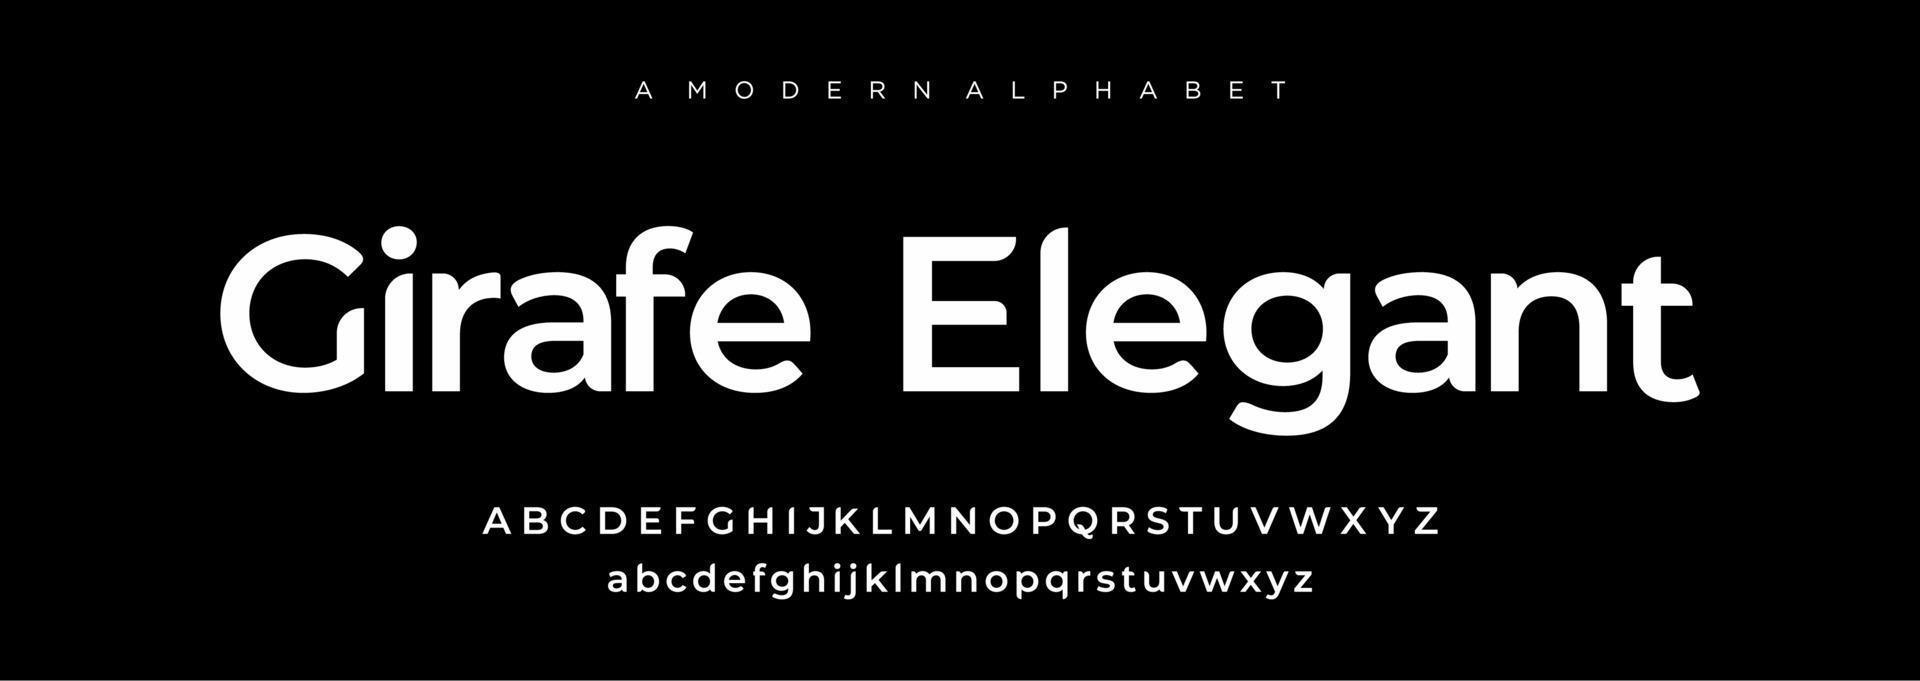 alphabet letters font Elegant awesome vector